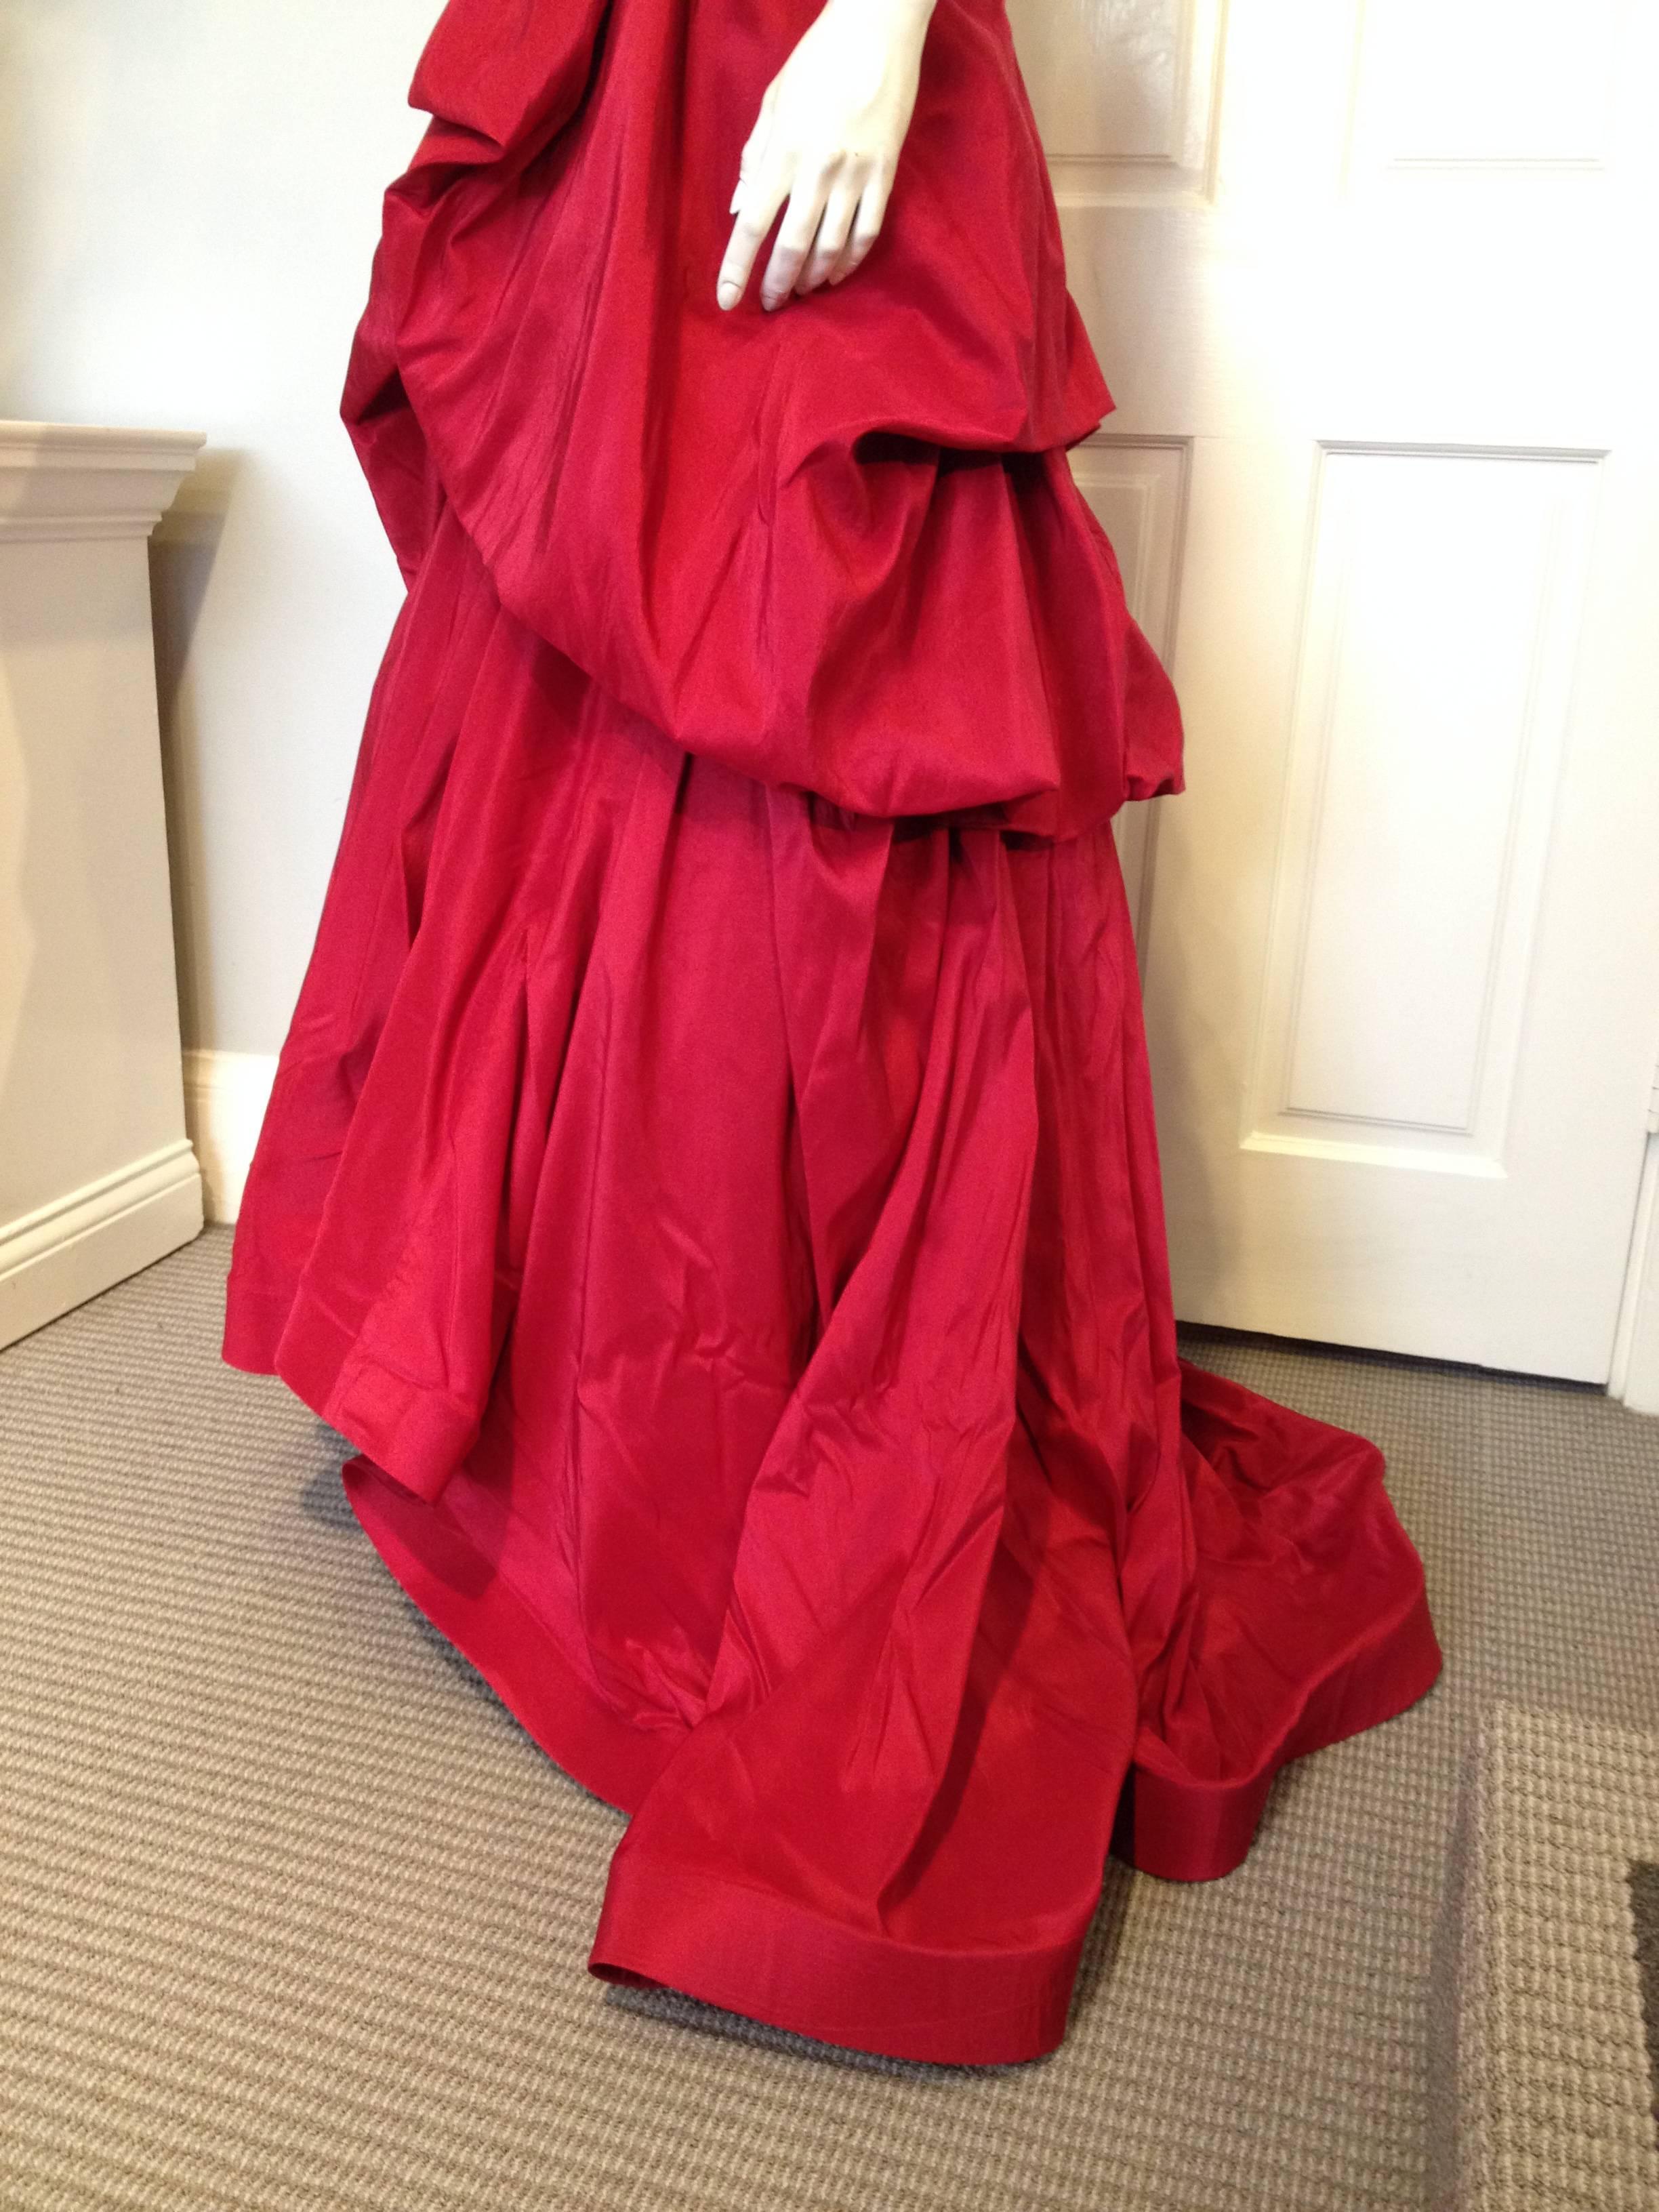 Monique Lhullier Red Silk Ball Gown 4